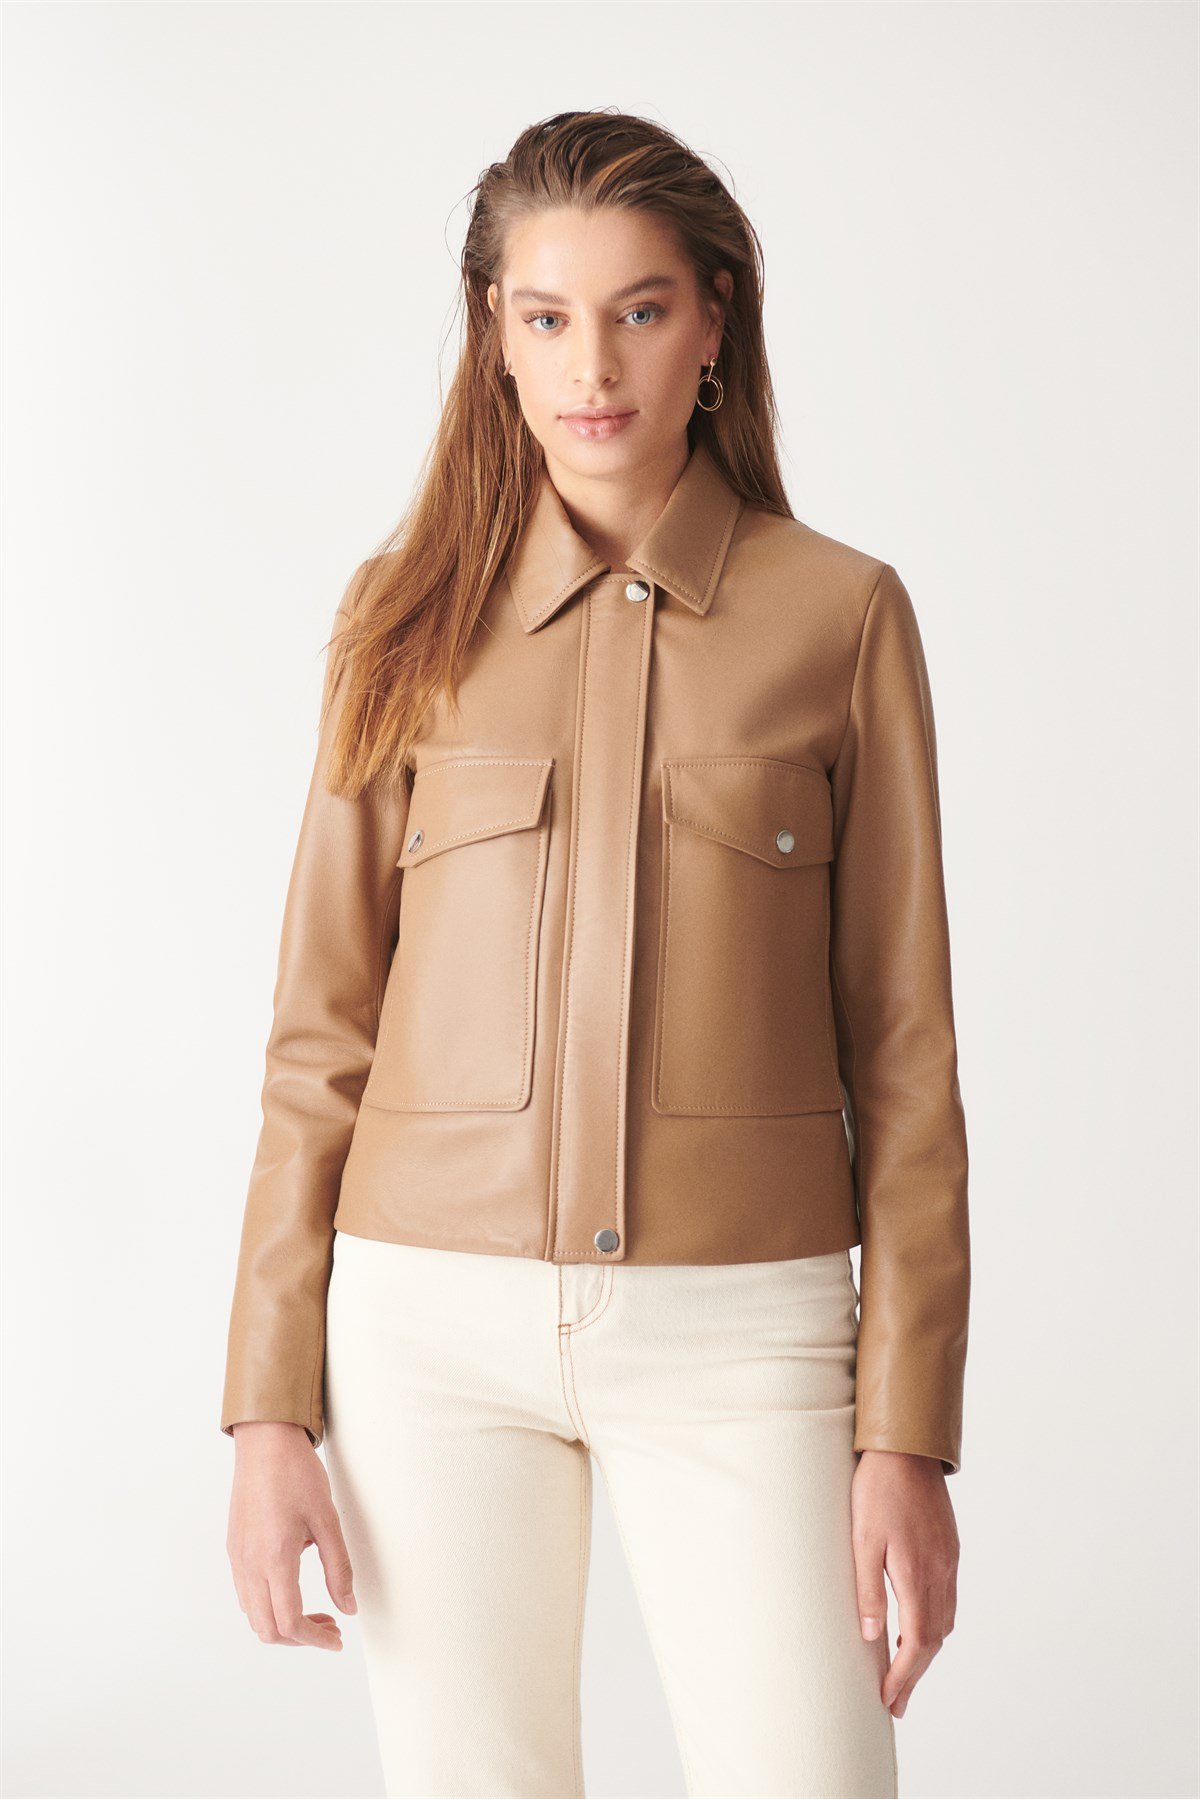 JULIET Light Brown Sport Leather Jacket | Women's Leather Jacket Models